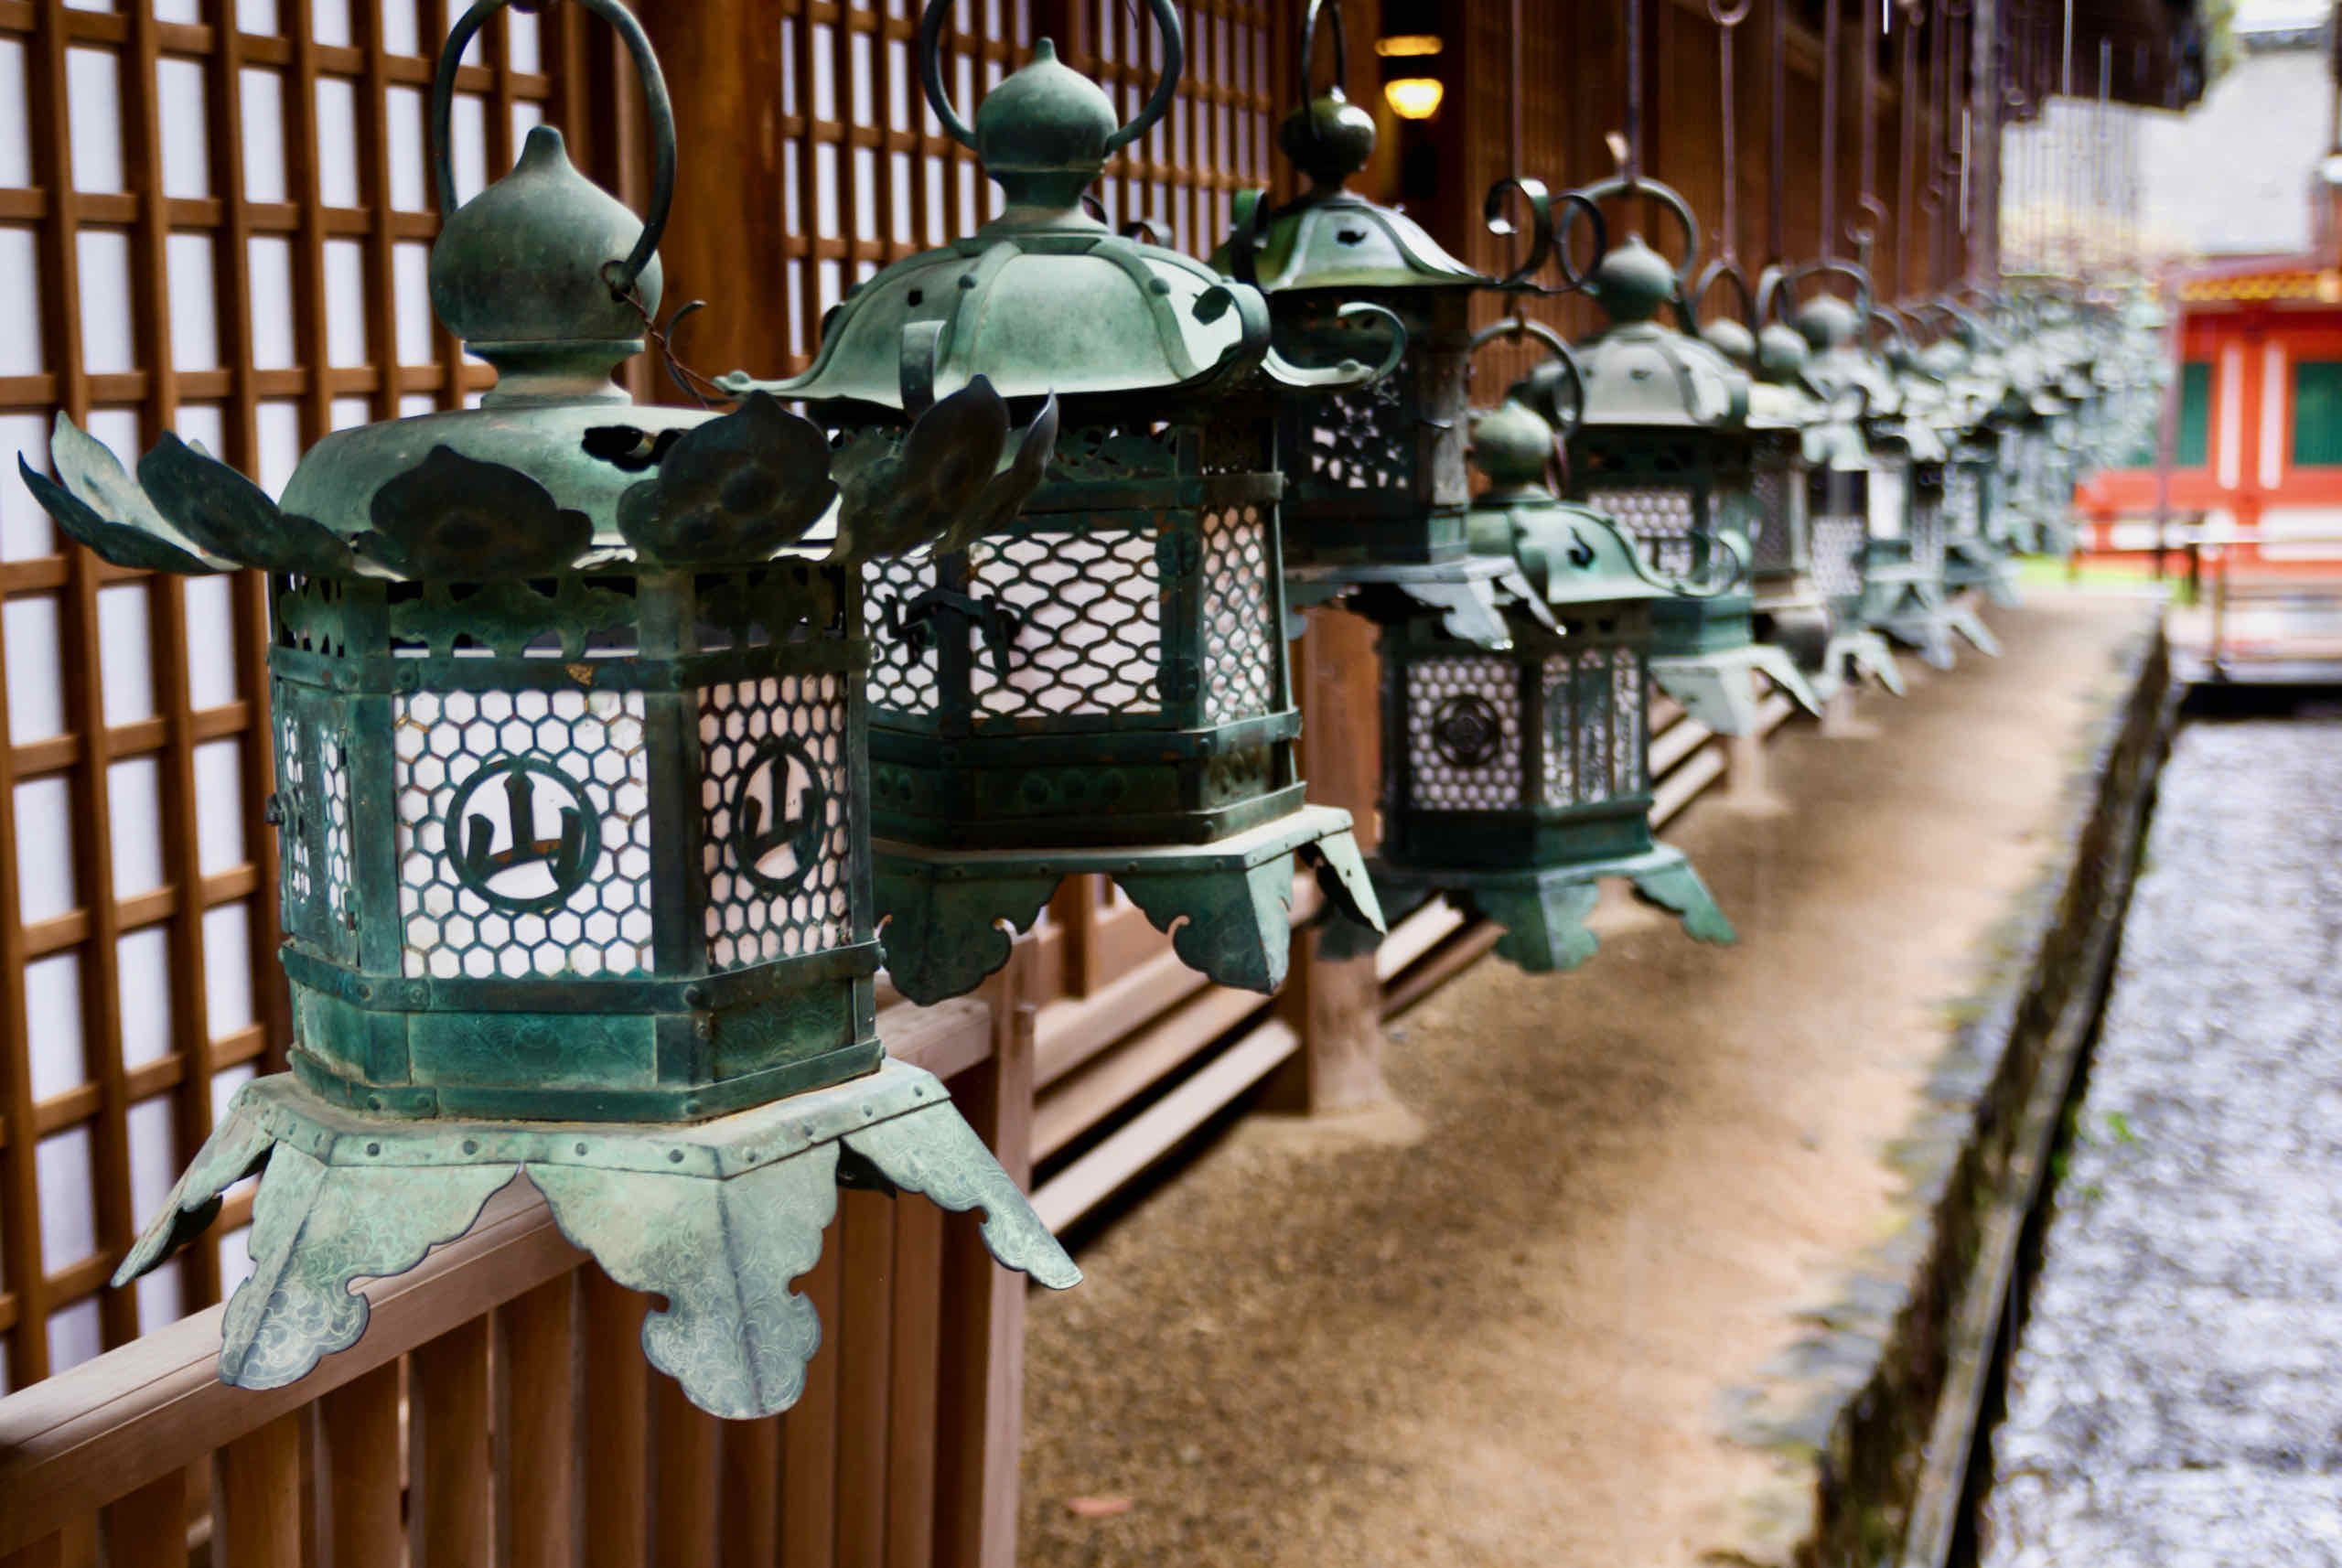 copper lanterns